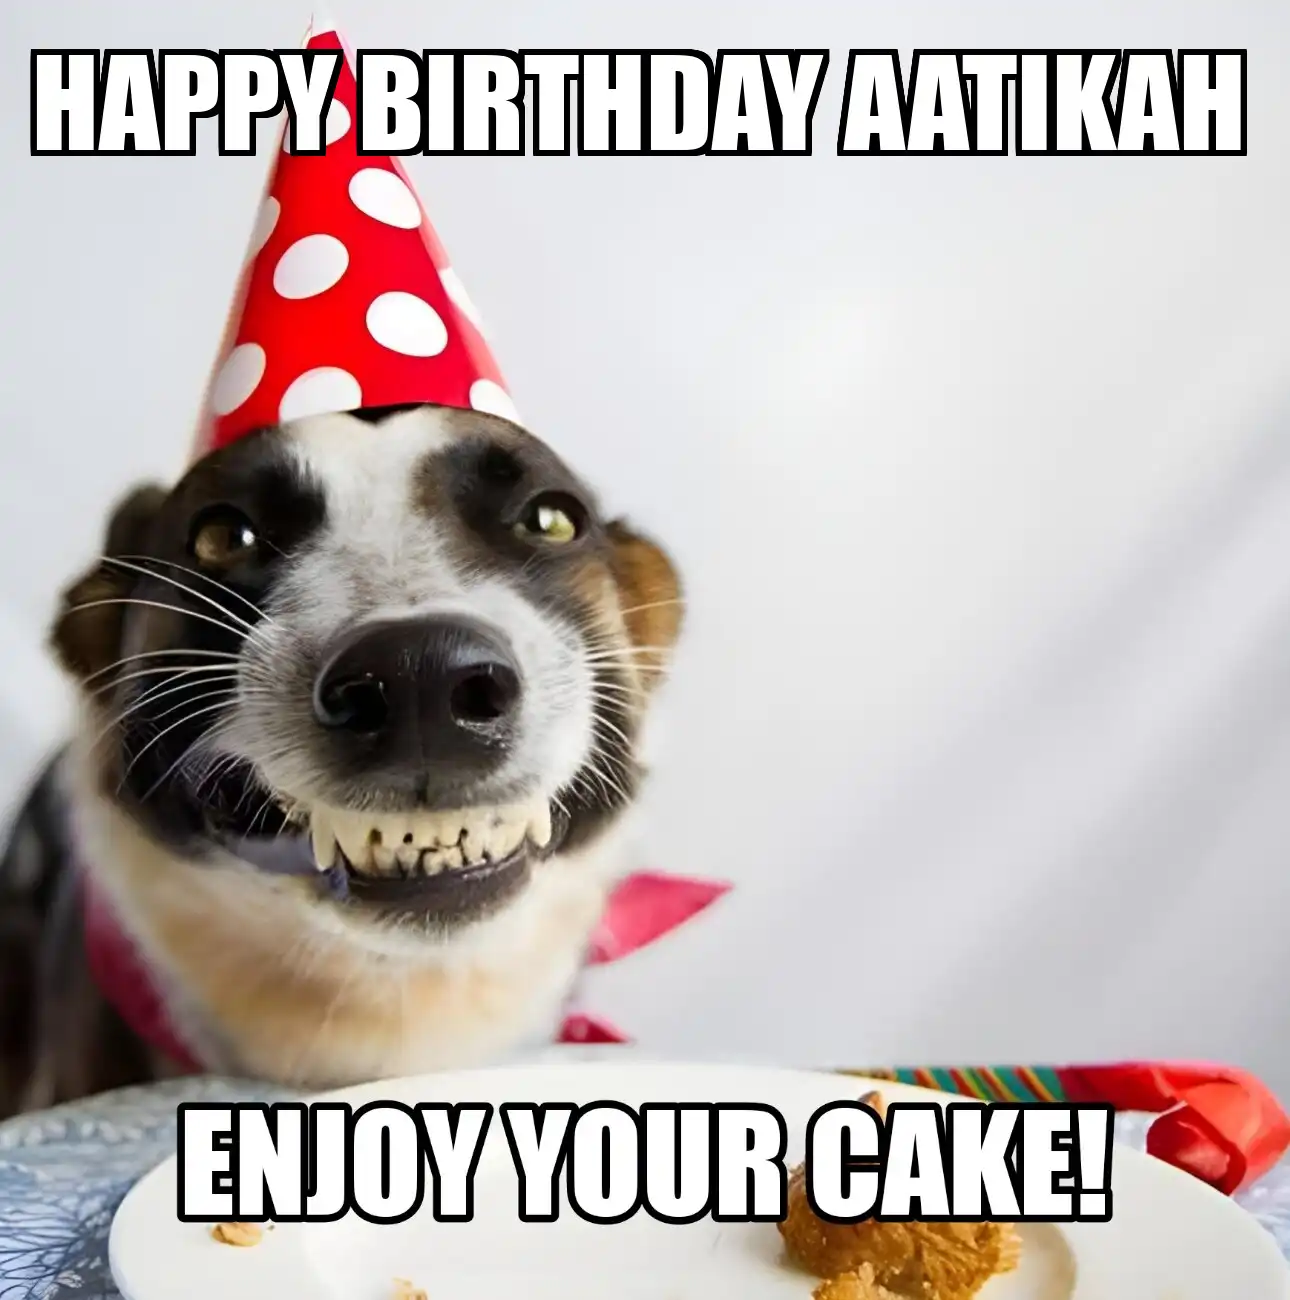 Happy Birthday Aatikah Enjoy Your Cake Dog Meme